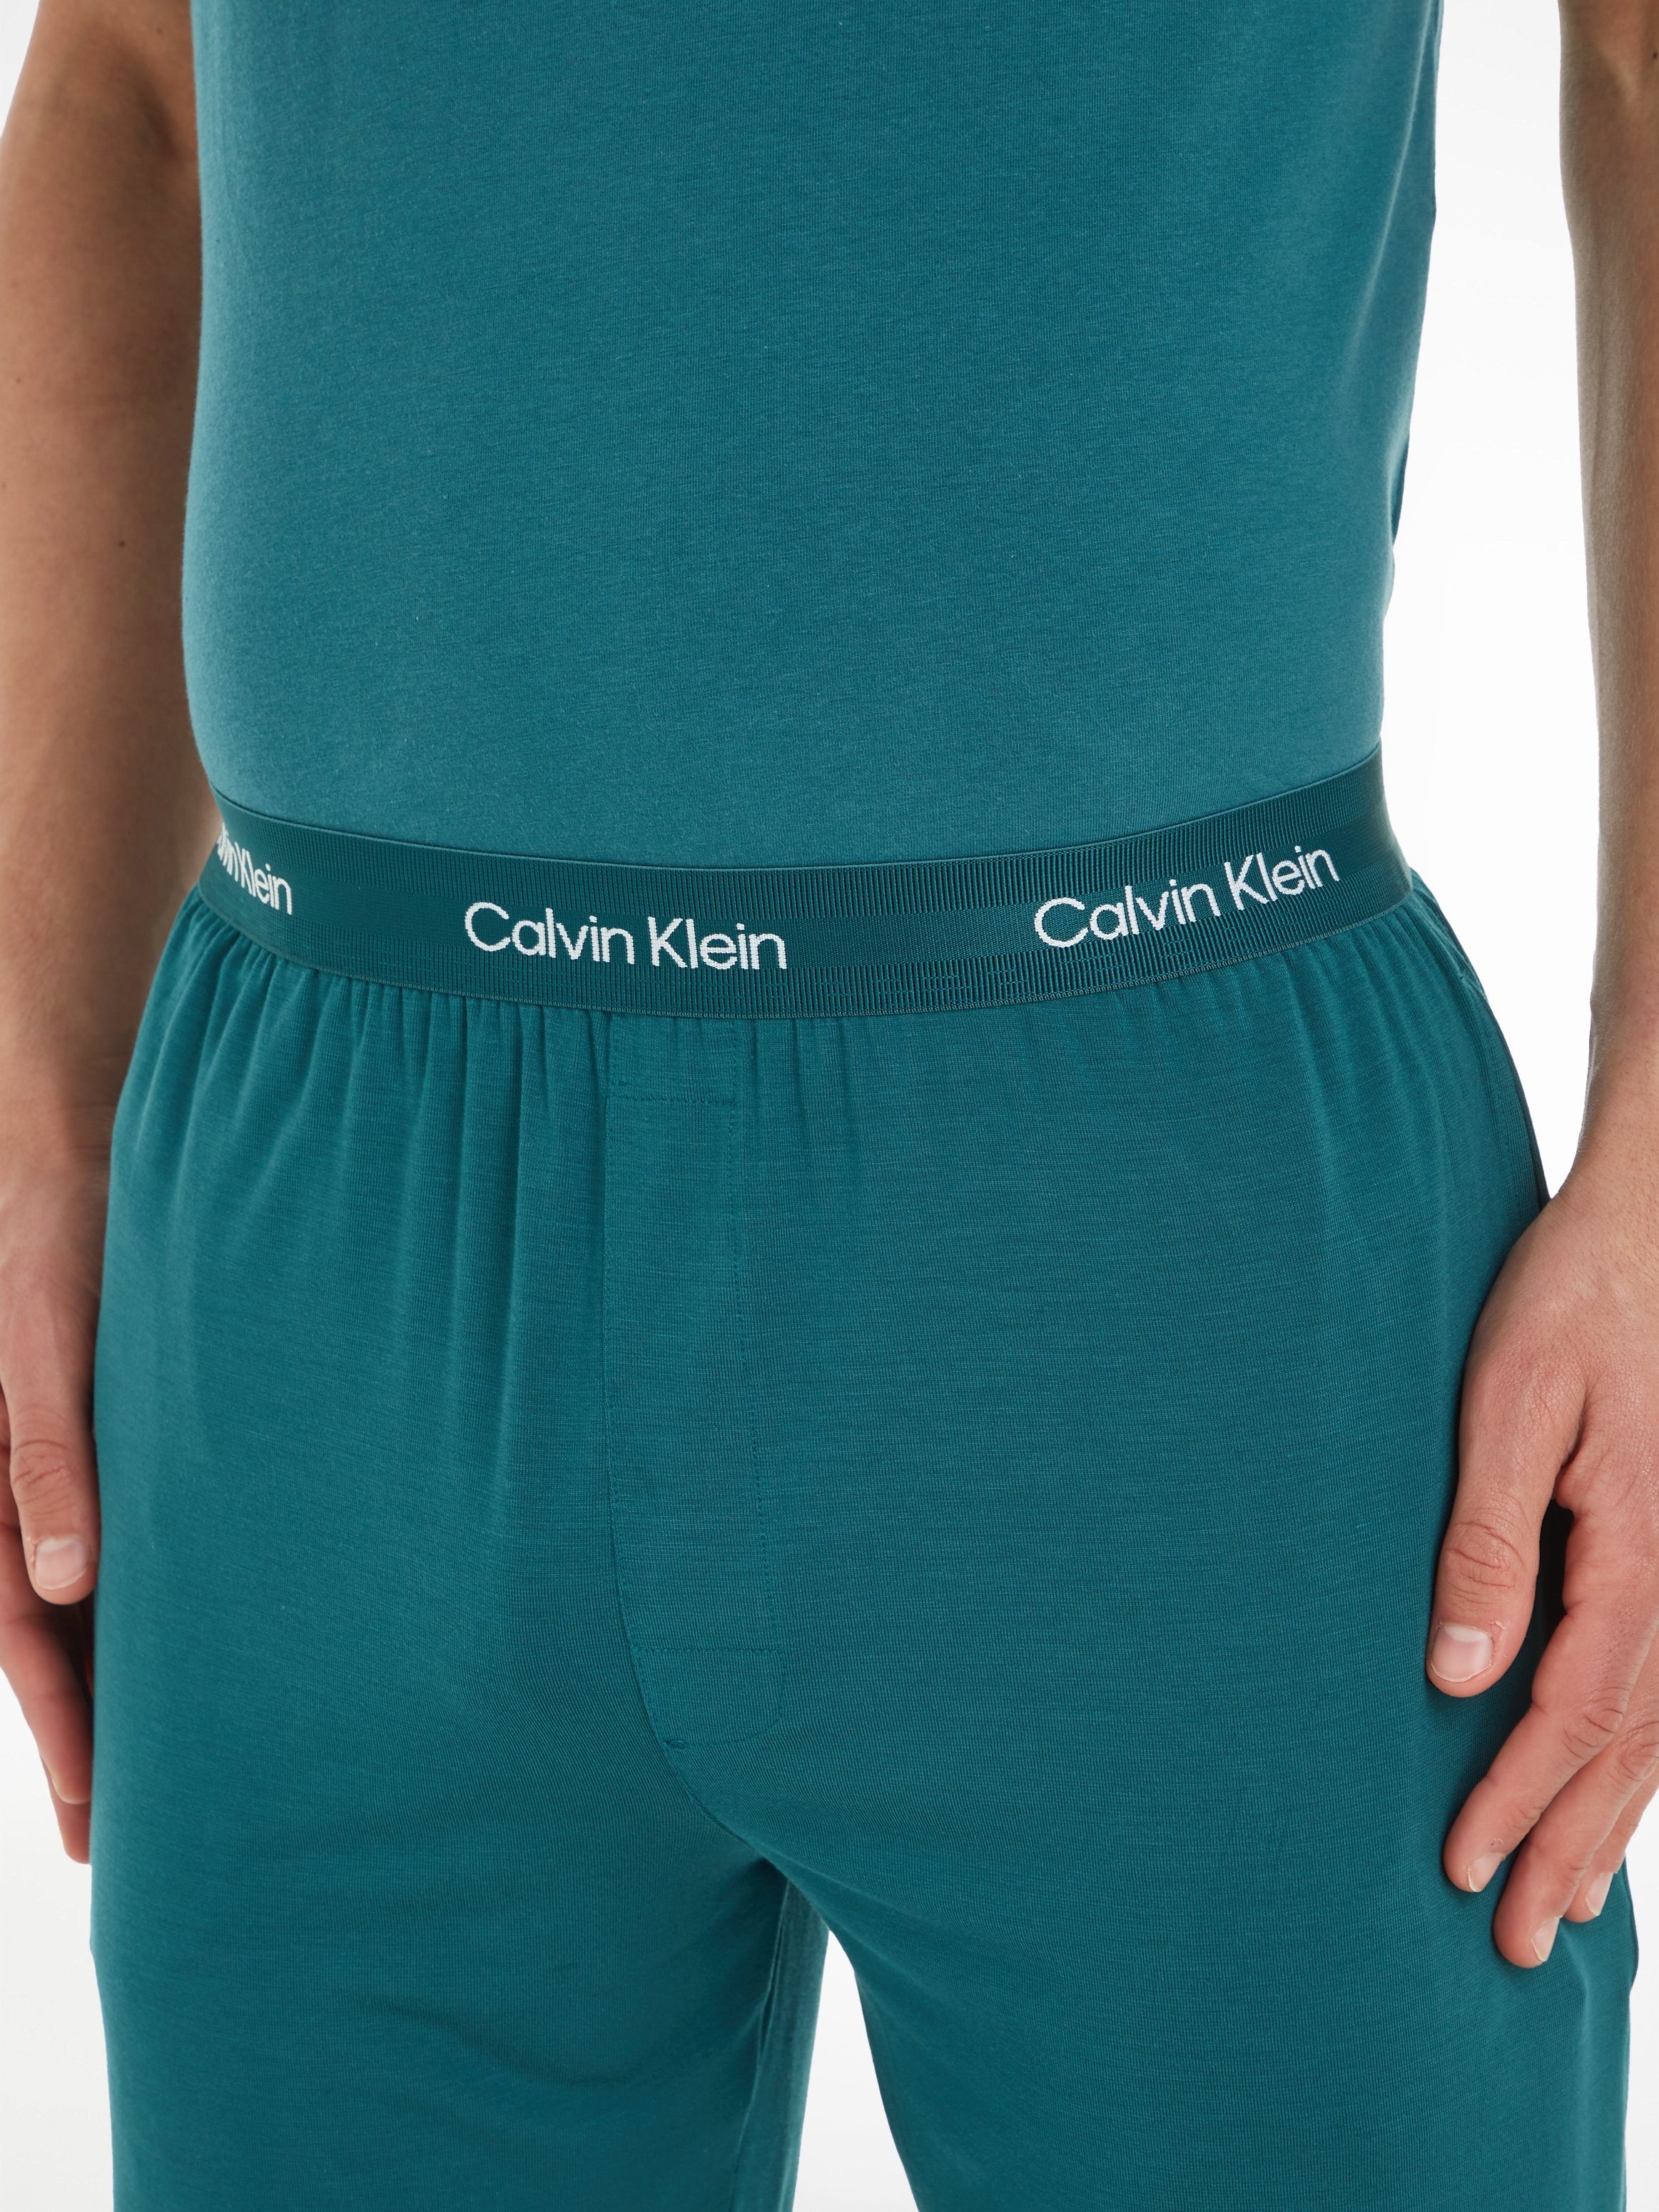 SHORT SLEEP melierter Klein Optik Underwear Pyjamashorts Calvin in